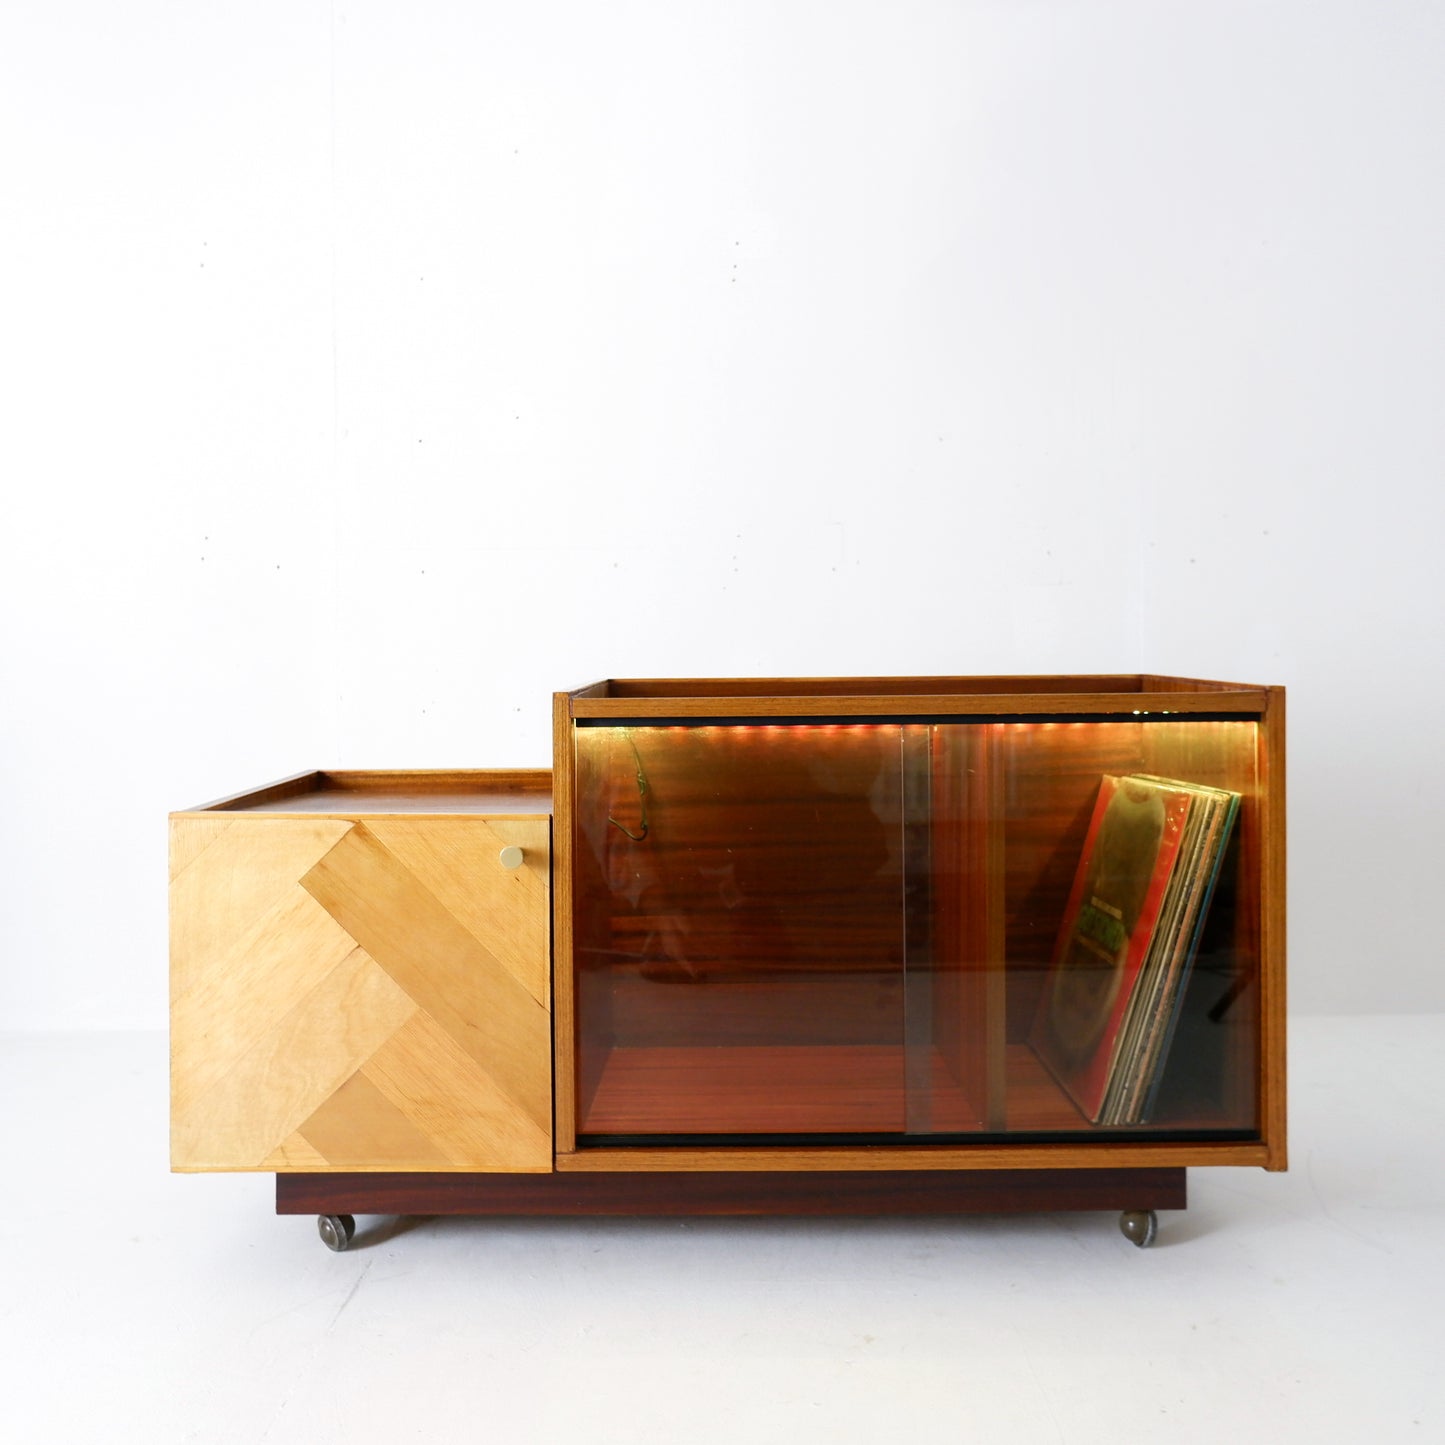 Vintage Teak Record Cabinet with Colour Change Lights! HiFi/Media Unit TV Stand